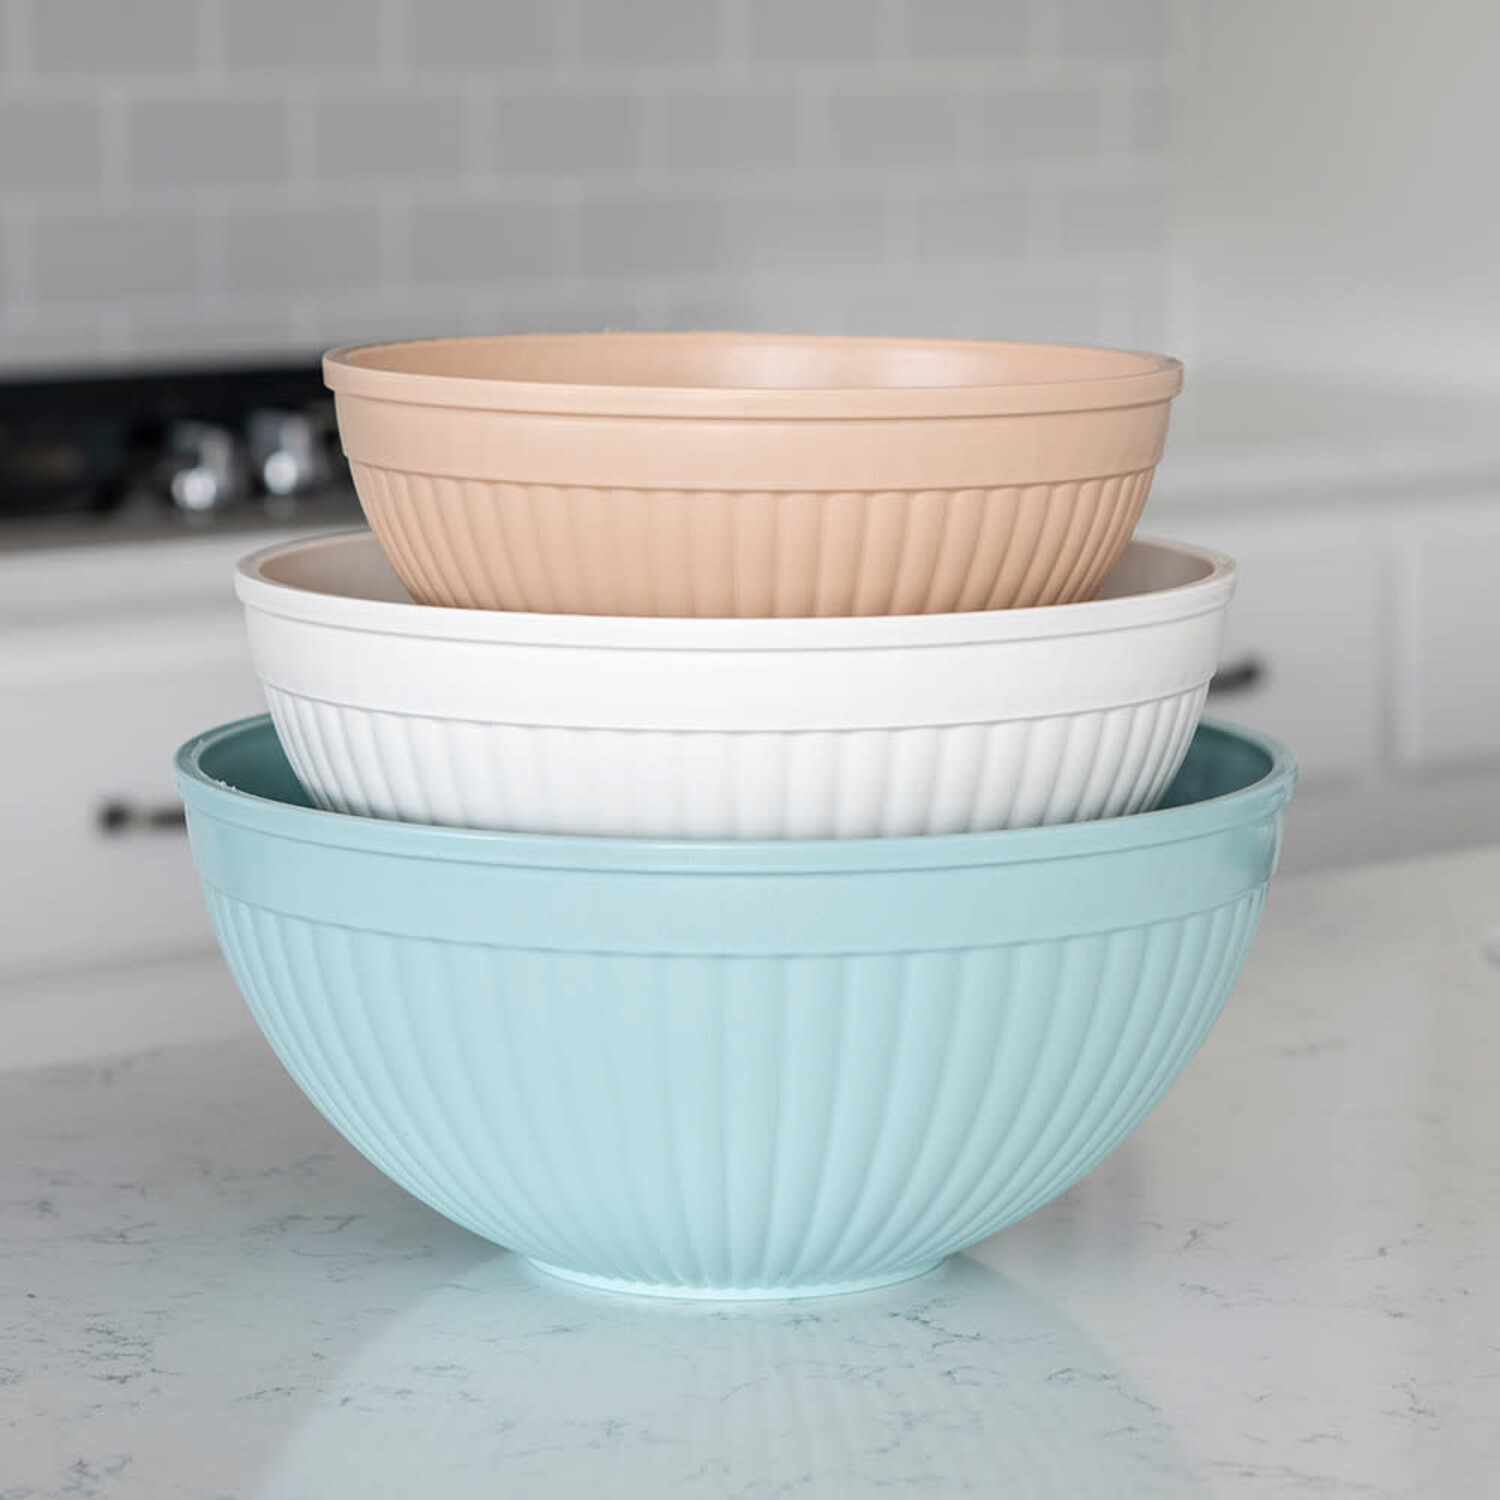 https://cdn.shoplightspeed.com/shops/633447/files/55181791/1500x4000x3/nordic-ware-taupe-turquoise-white-mixing-bowls-set.jpg